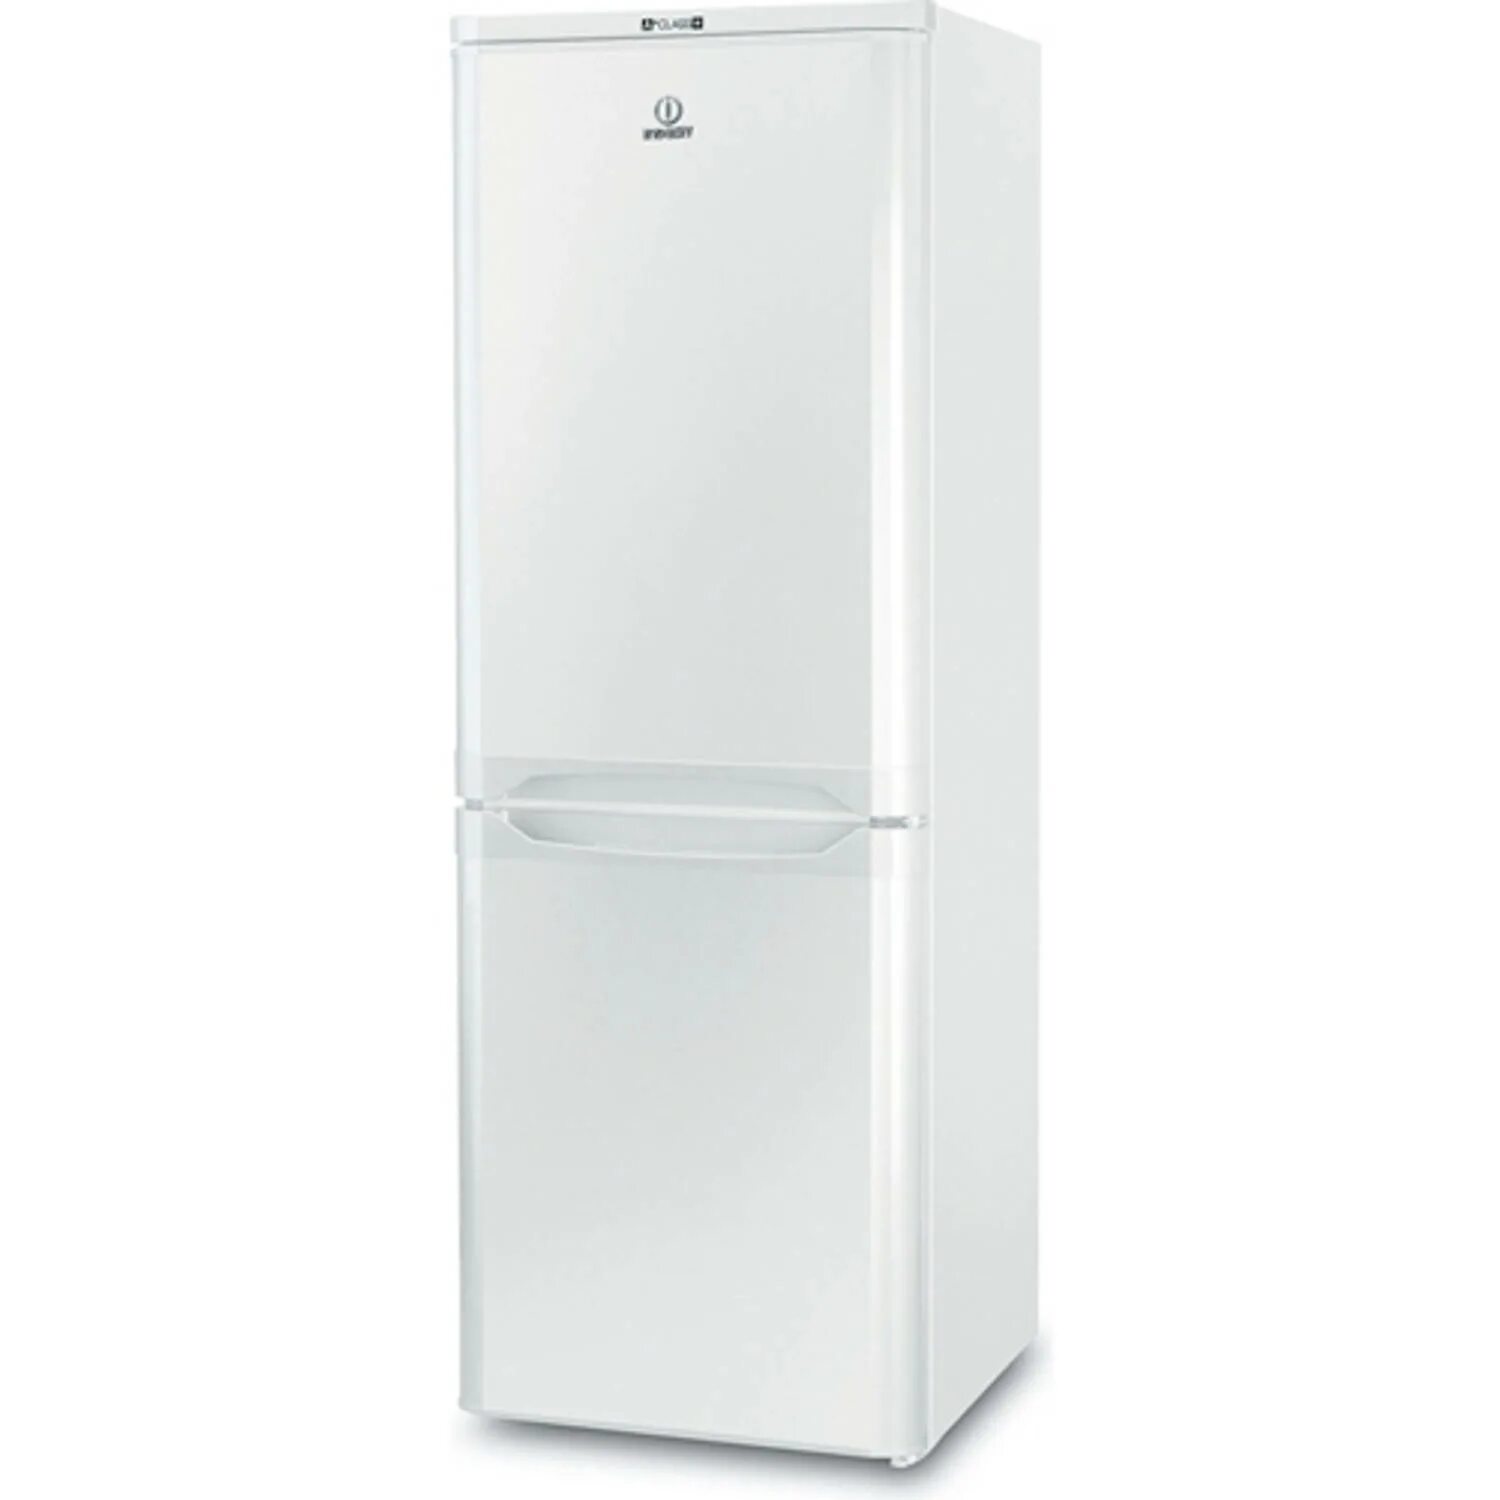 Индезит пермь. Холодильник Индезит 207170130.